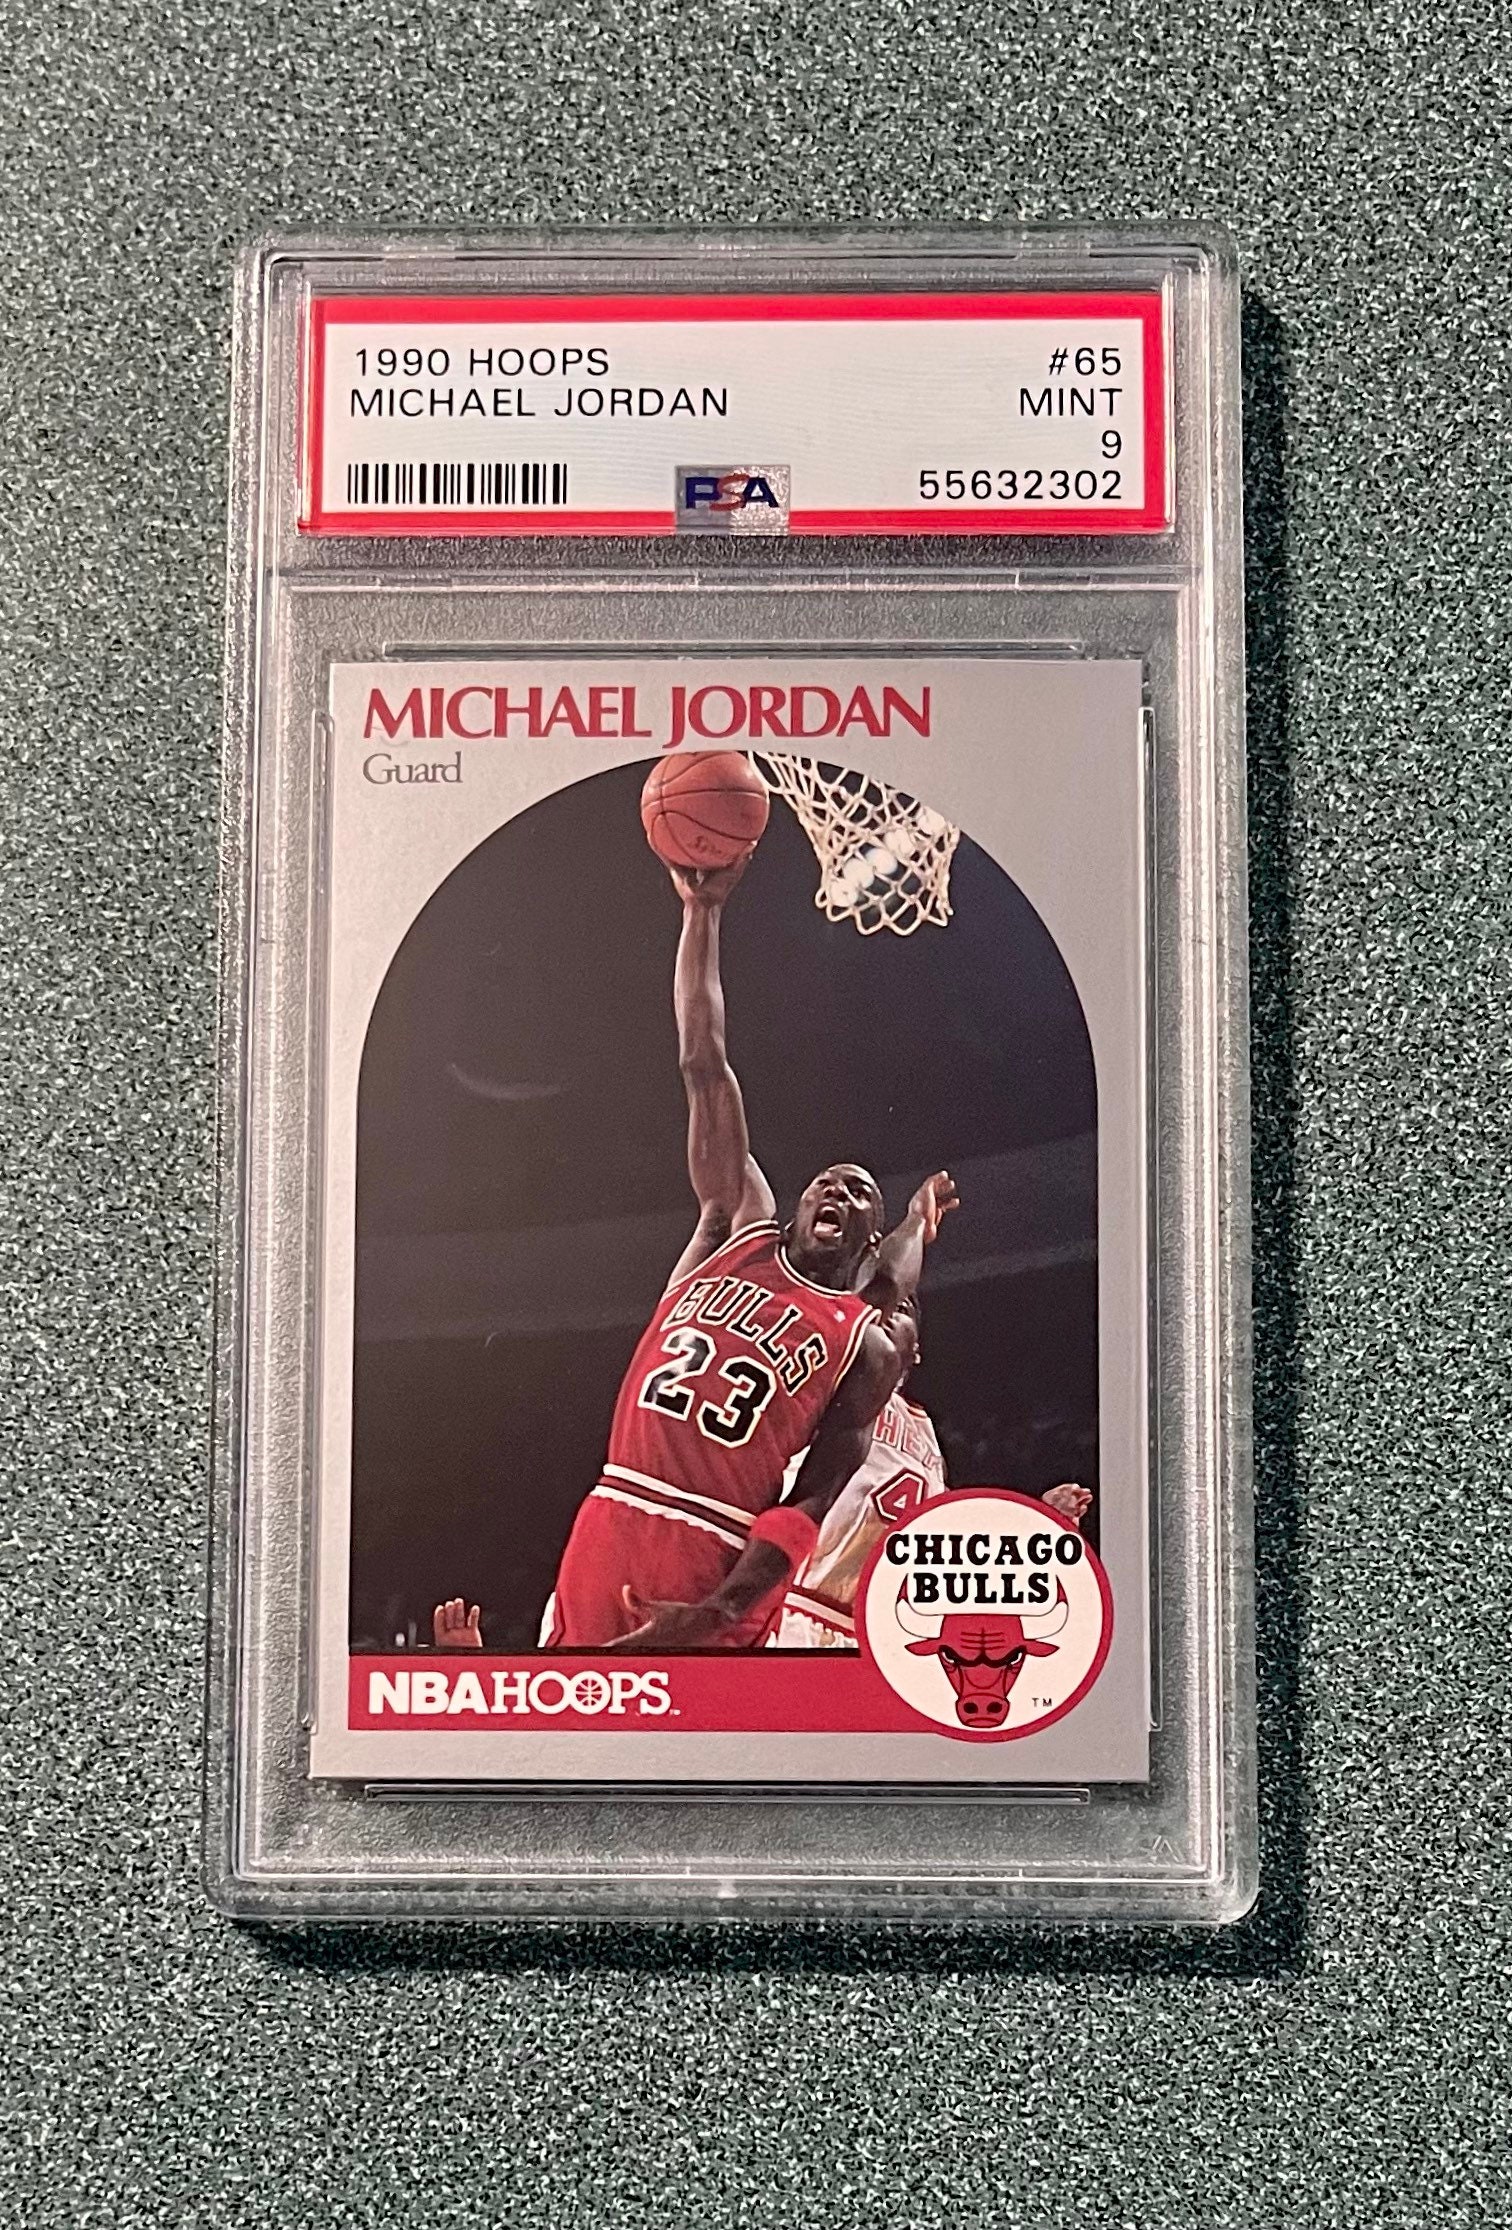 1991 NBA Hoops Michael Jordan Basketball Card / Chicago Bulls 